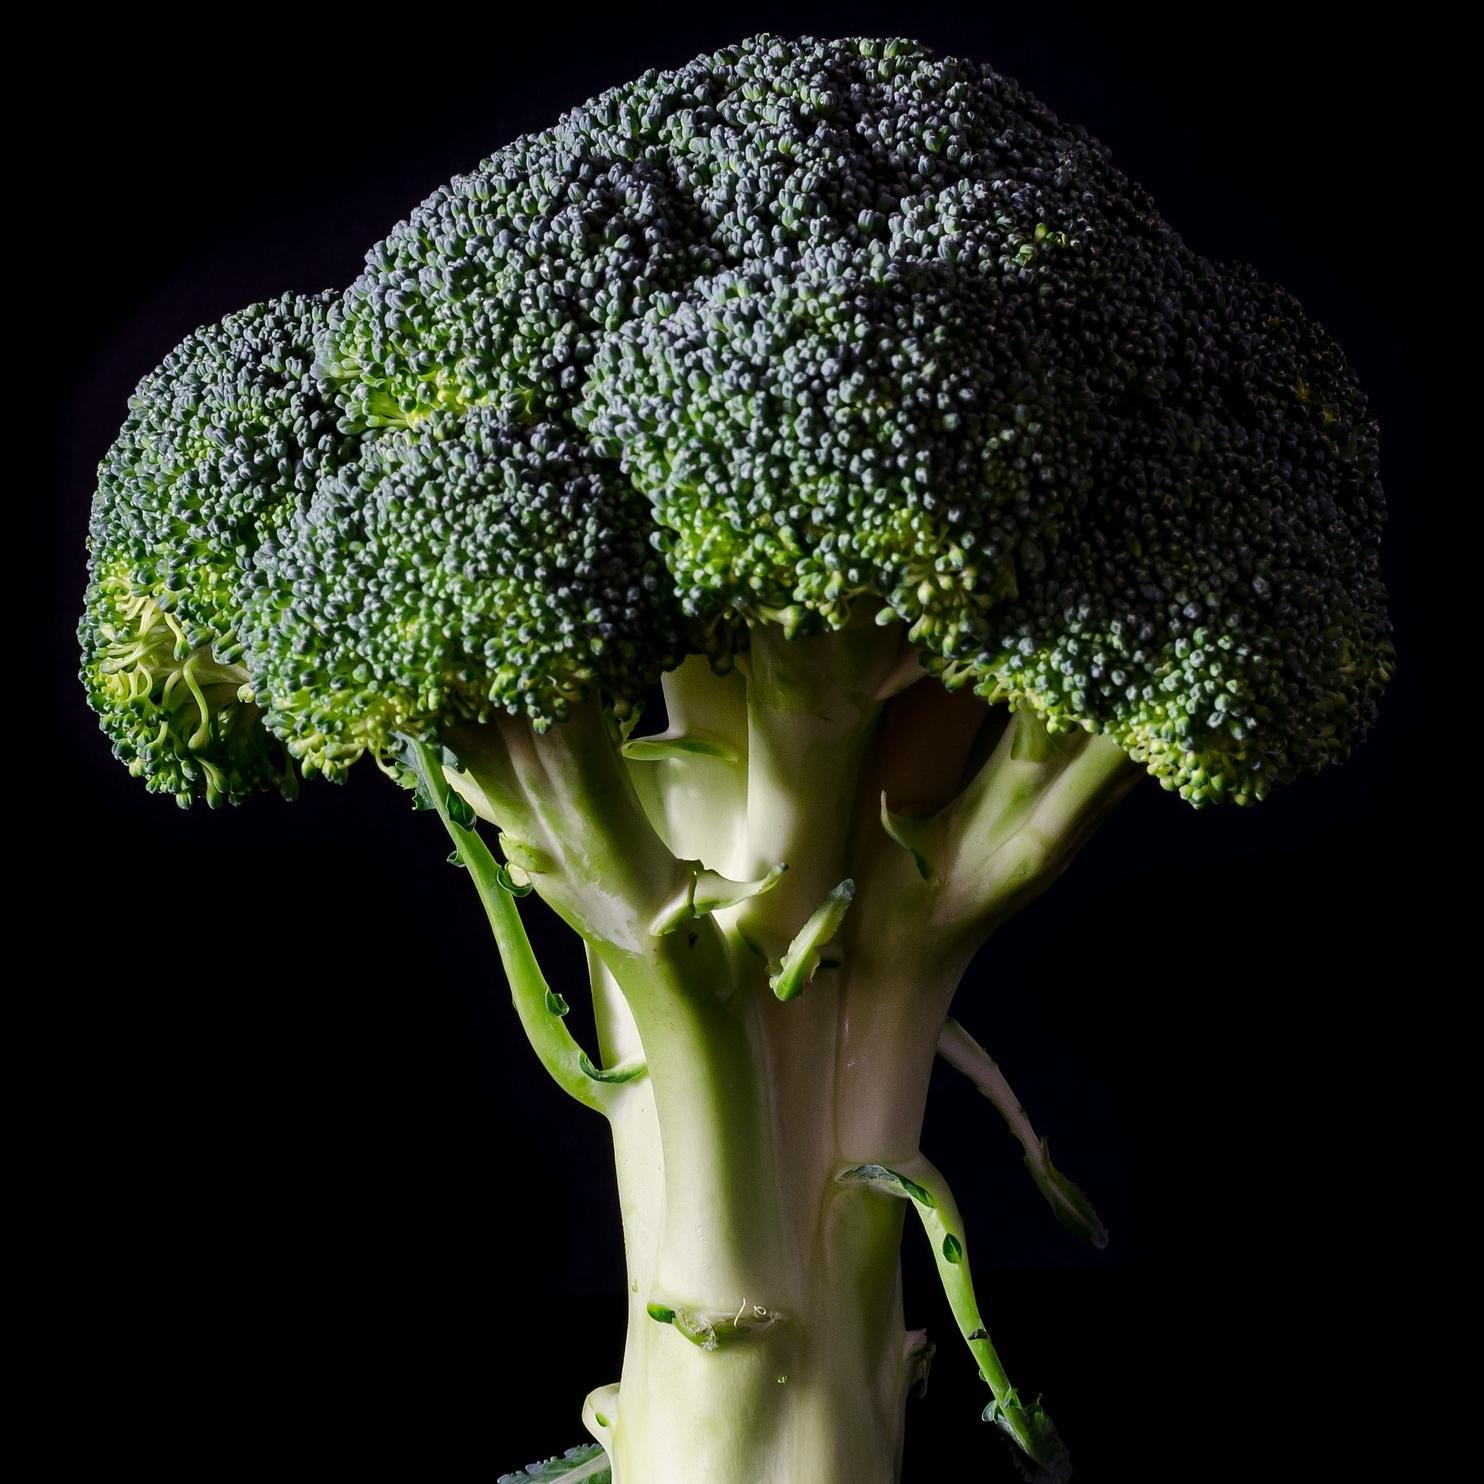 A head of broccoli